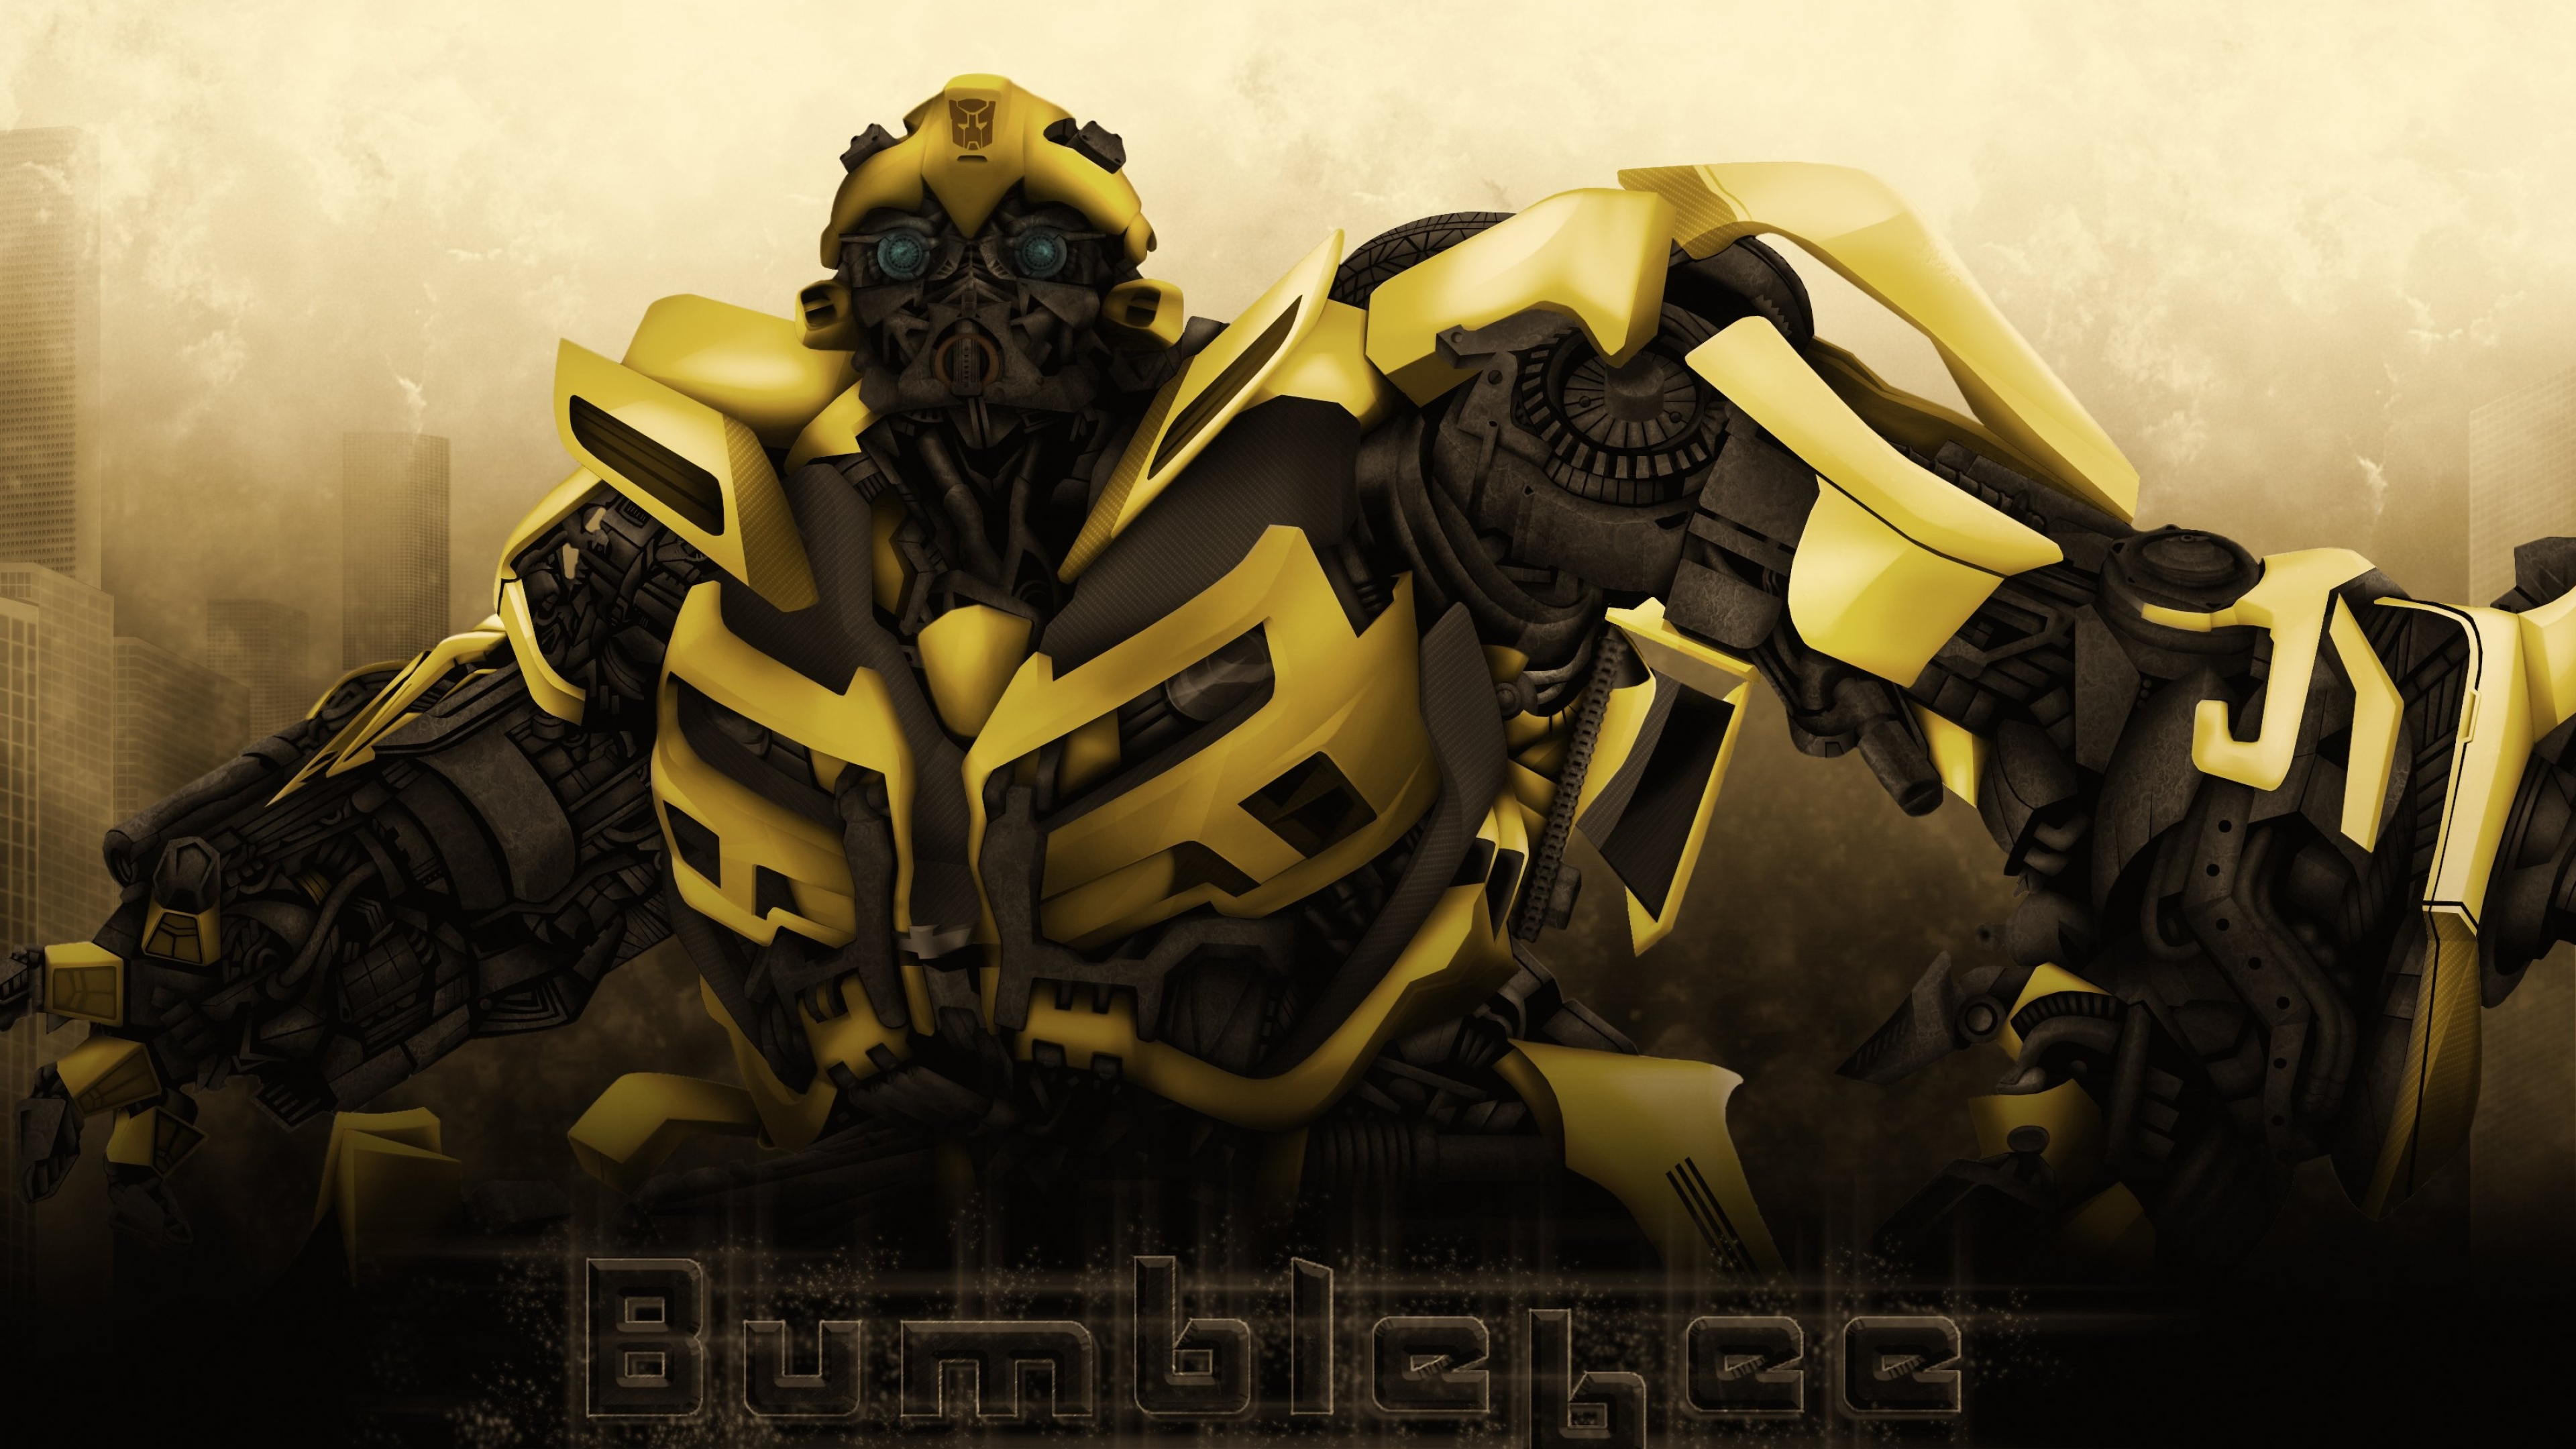 Transformer Bumblebee, Camaro yellow, Autobot car, Racecar, 3840x2160 4K Desktop